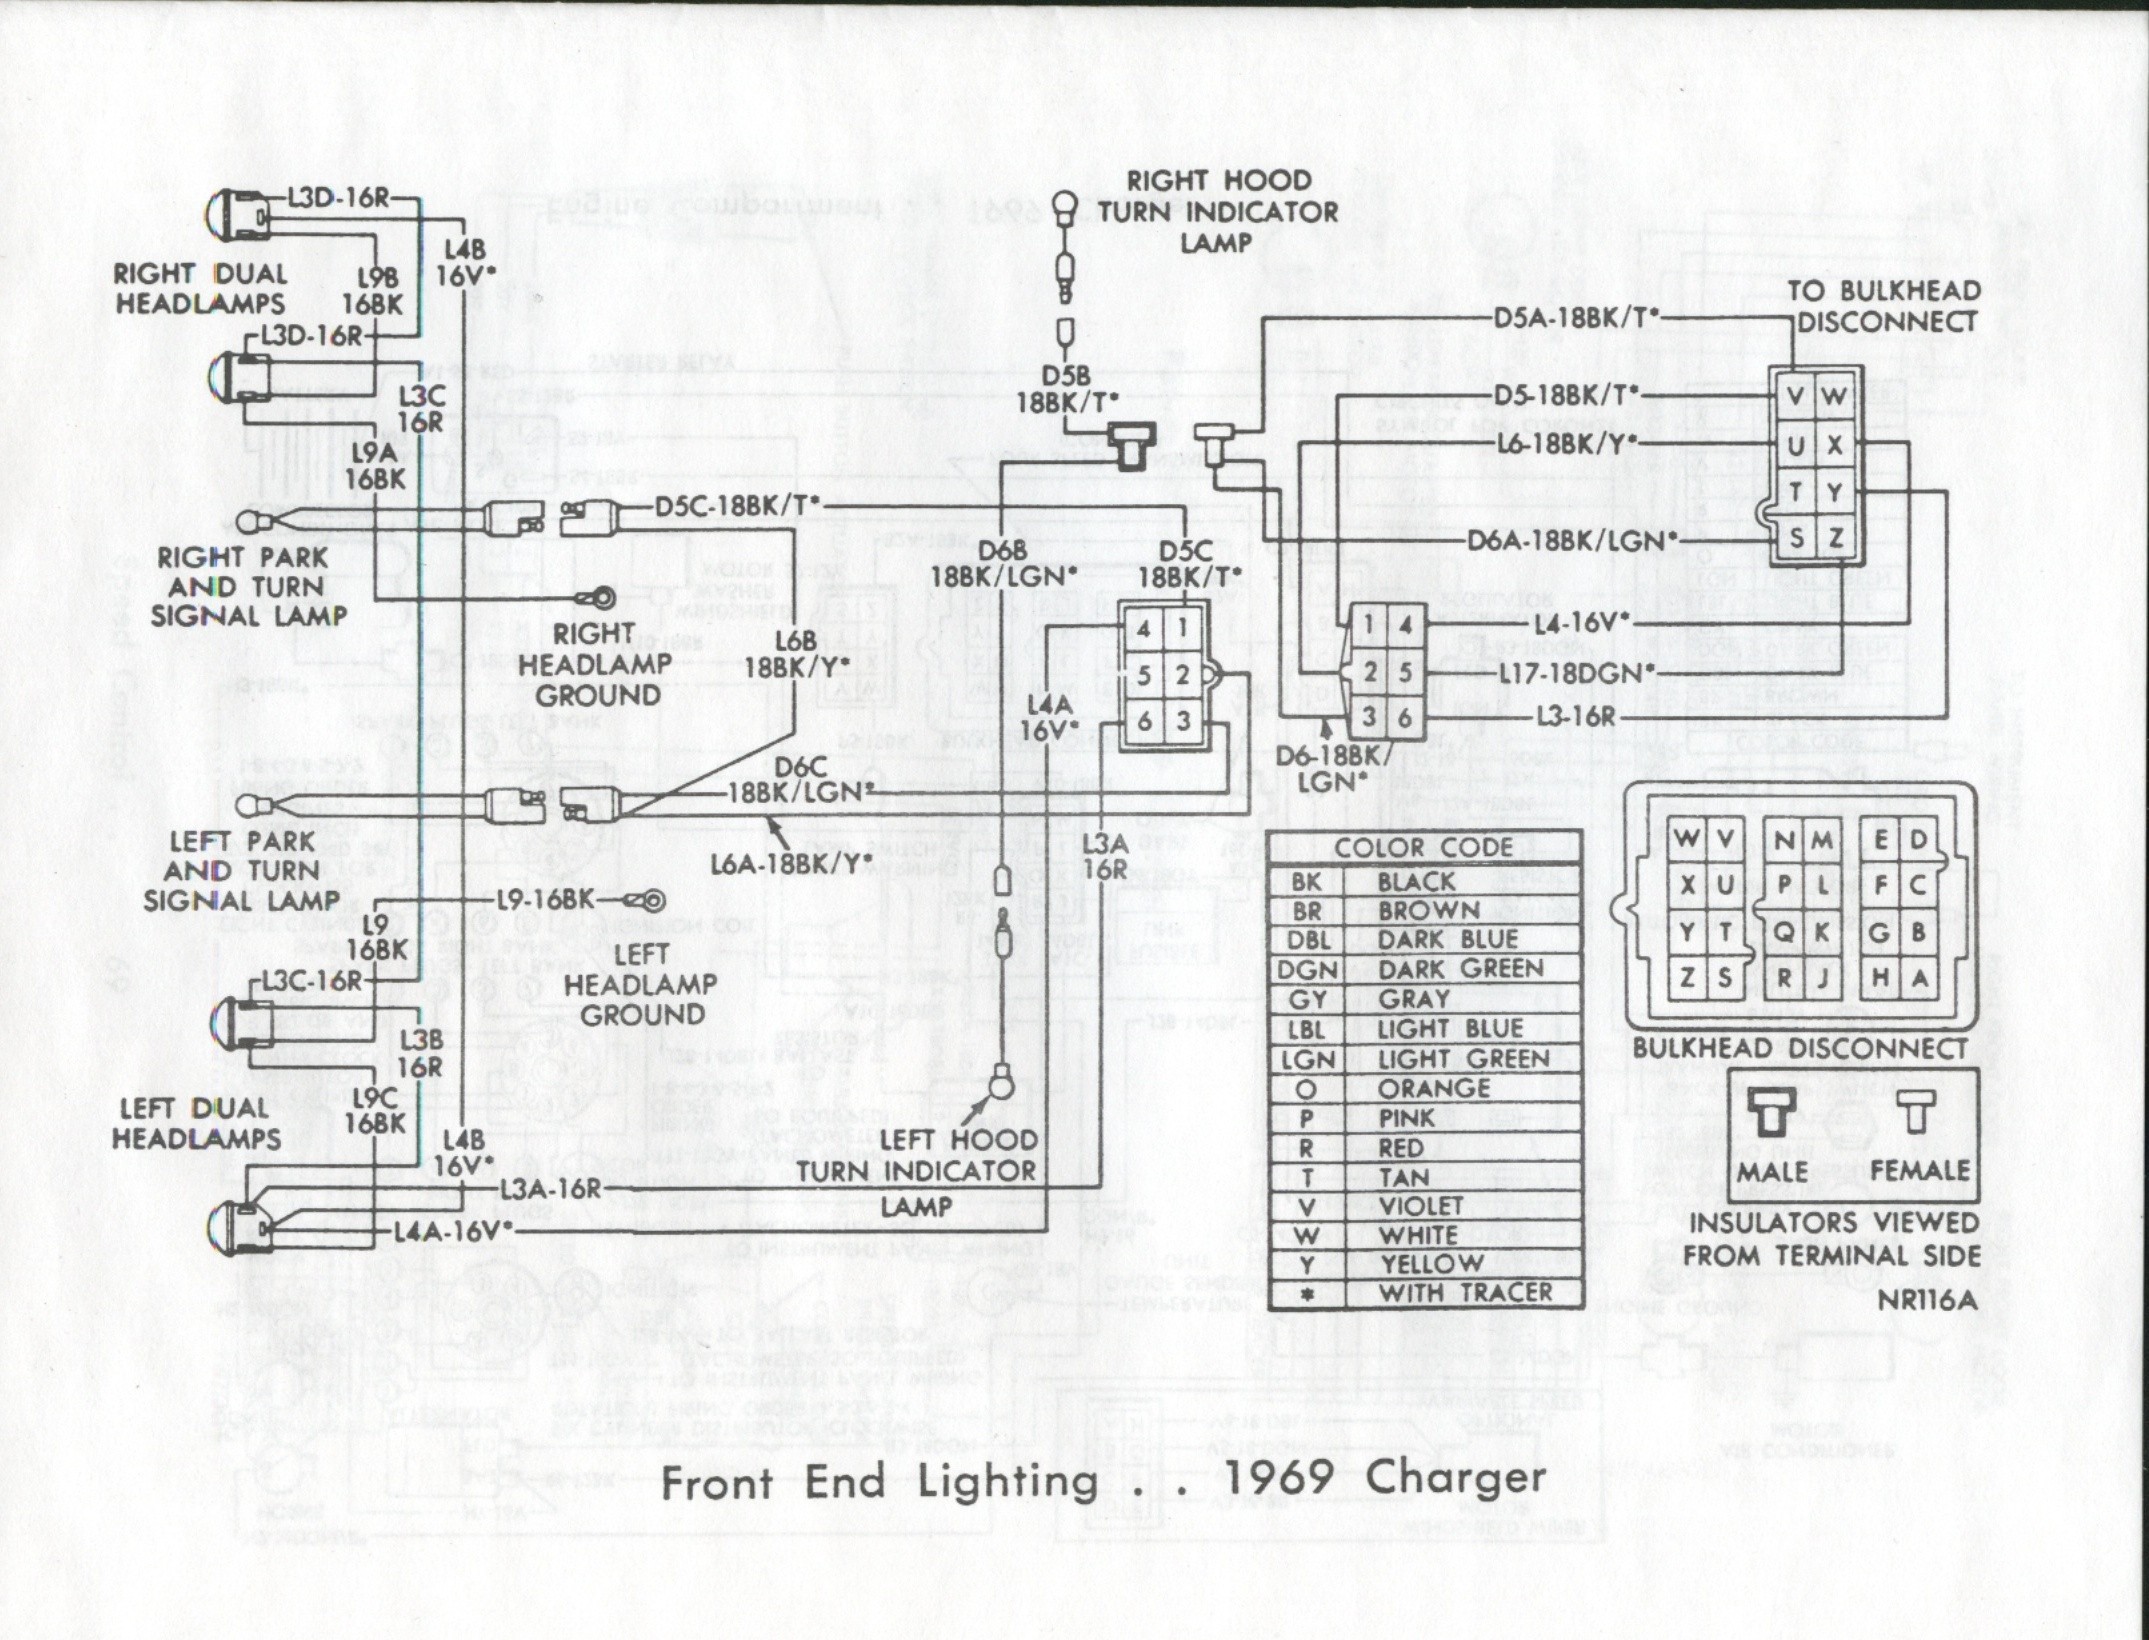 46re wiring diagram